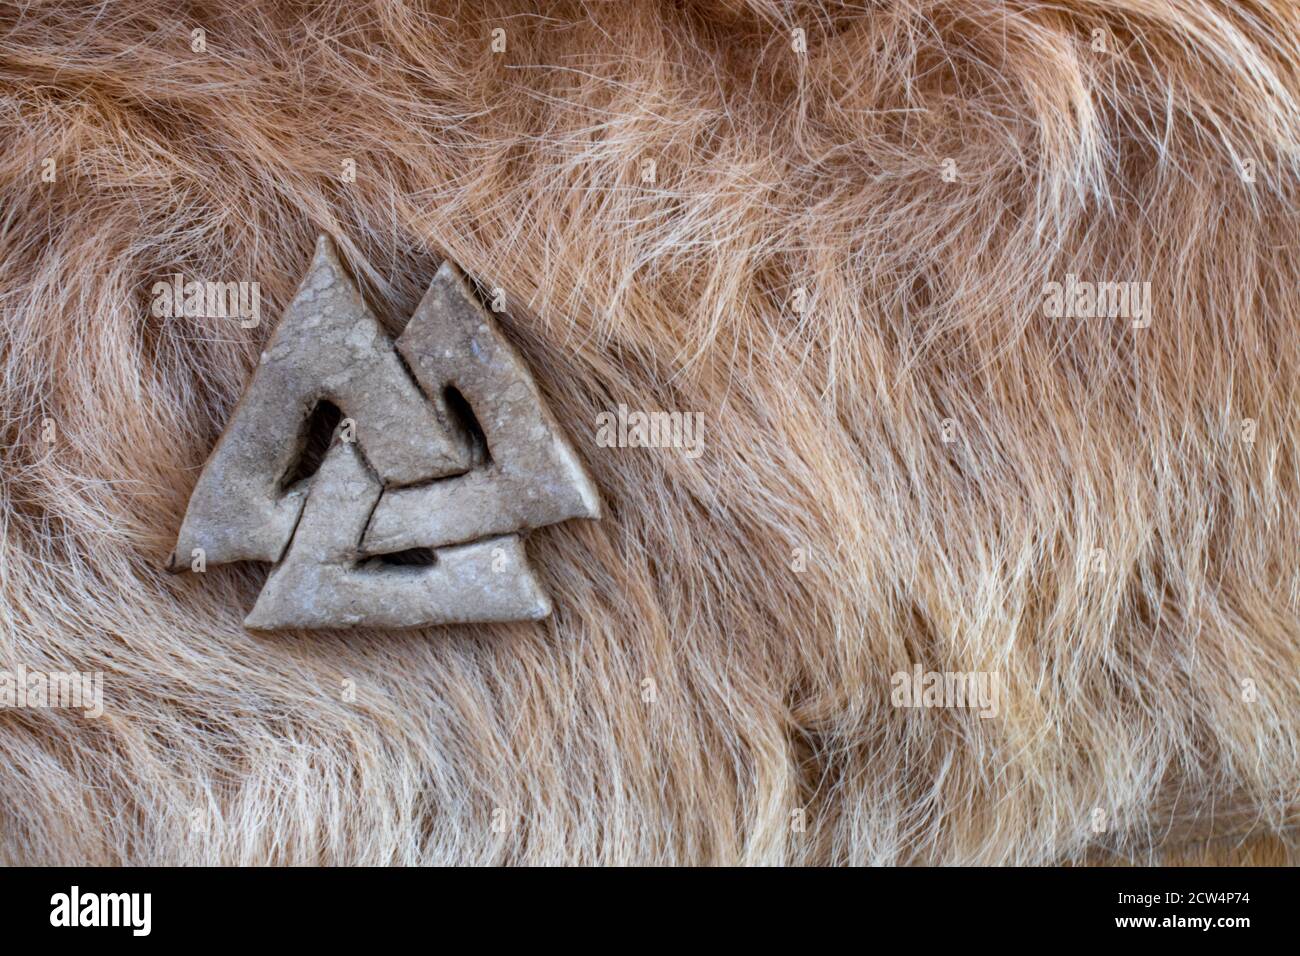 6,047 Viking Fur Images, Stock Photos, 3D objects, & Vectors